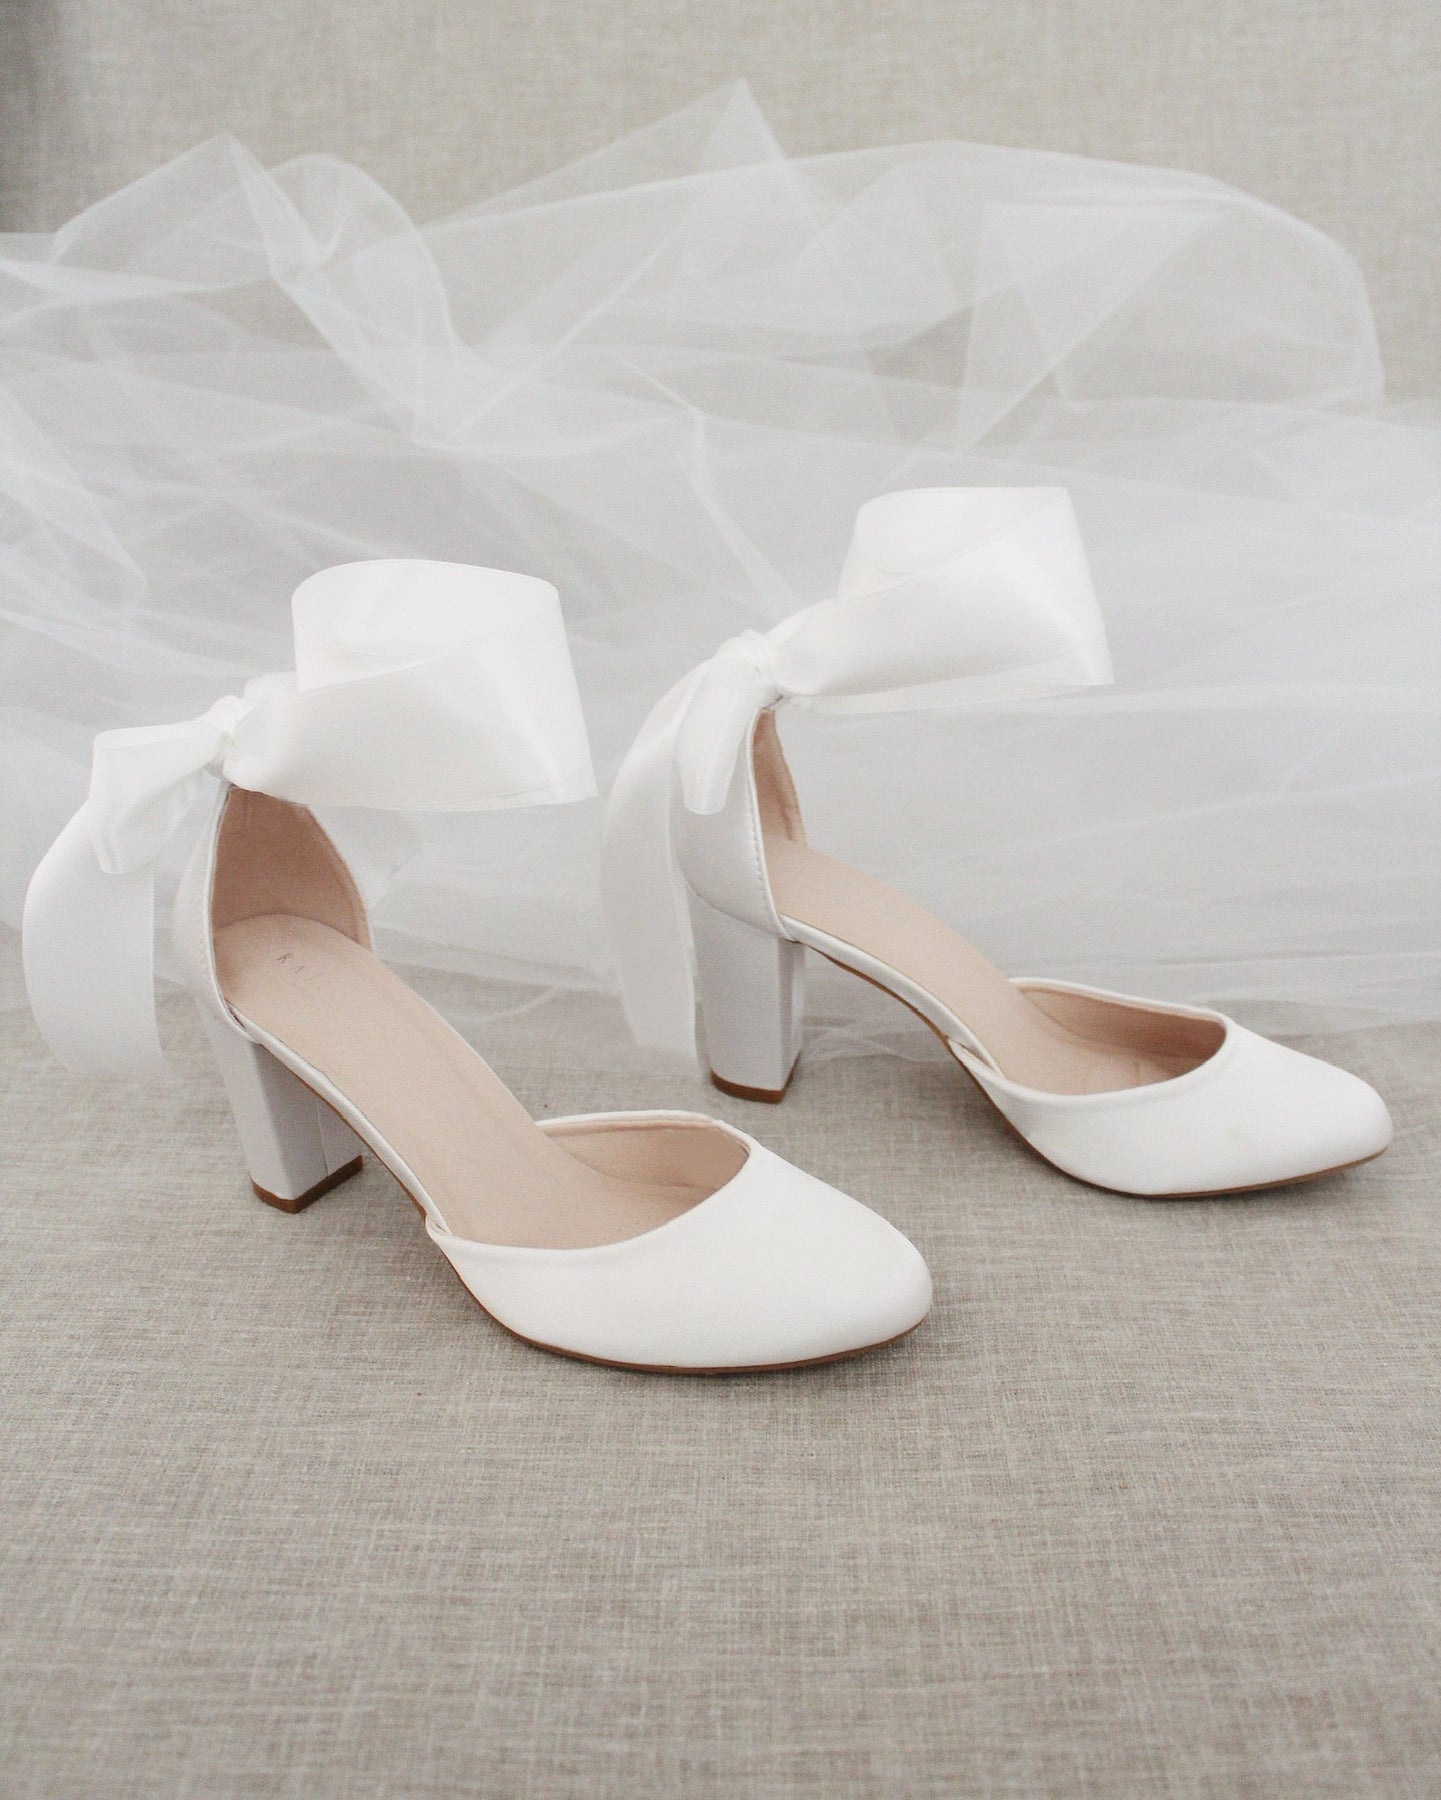 White Platform Sandals - High Heeled Sandals - Ankle Wrap Sandals - Lulus